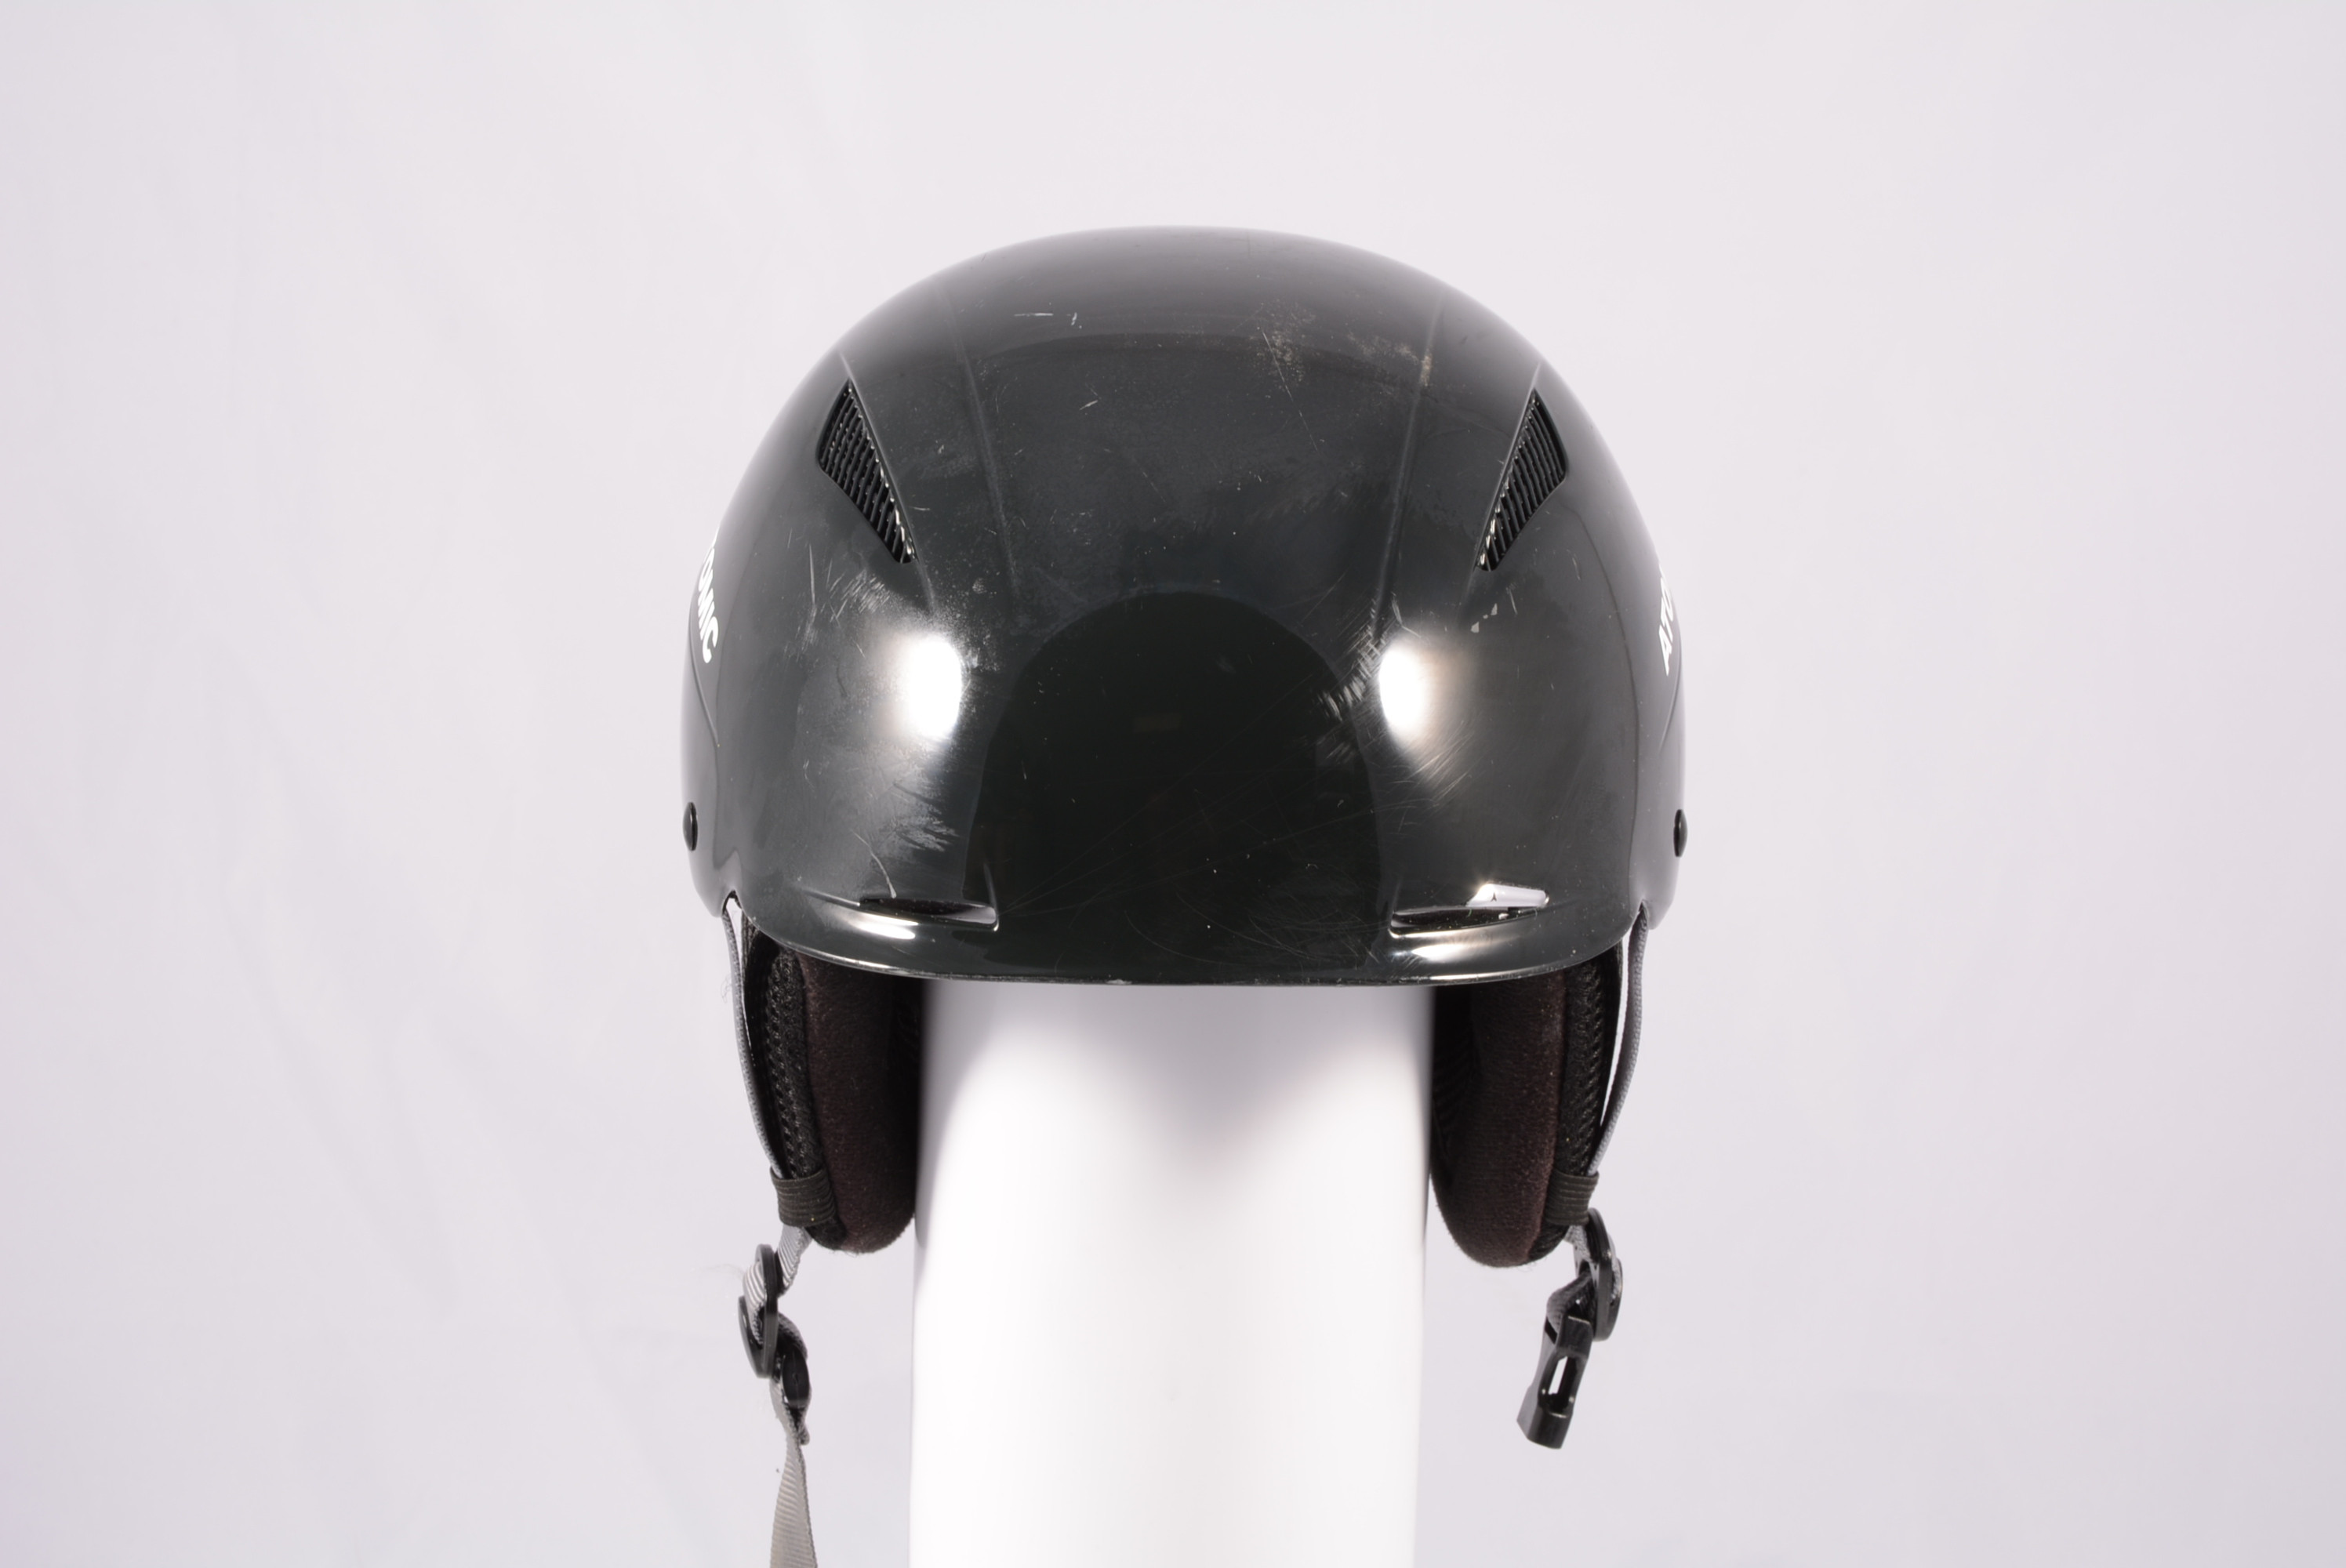 ski/snowboard helmet ATOMIC SAVOR LF live fit, BLACK/grey, adjustable